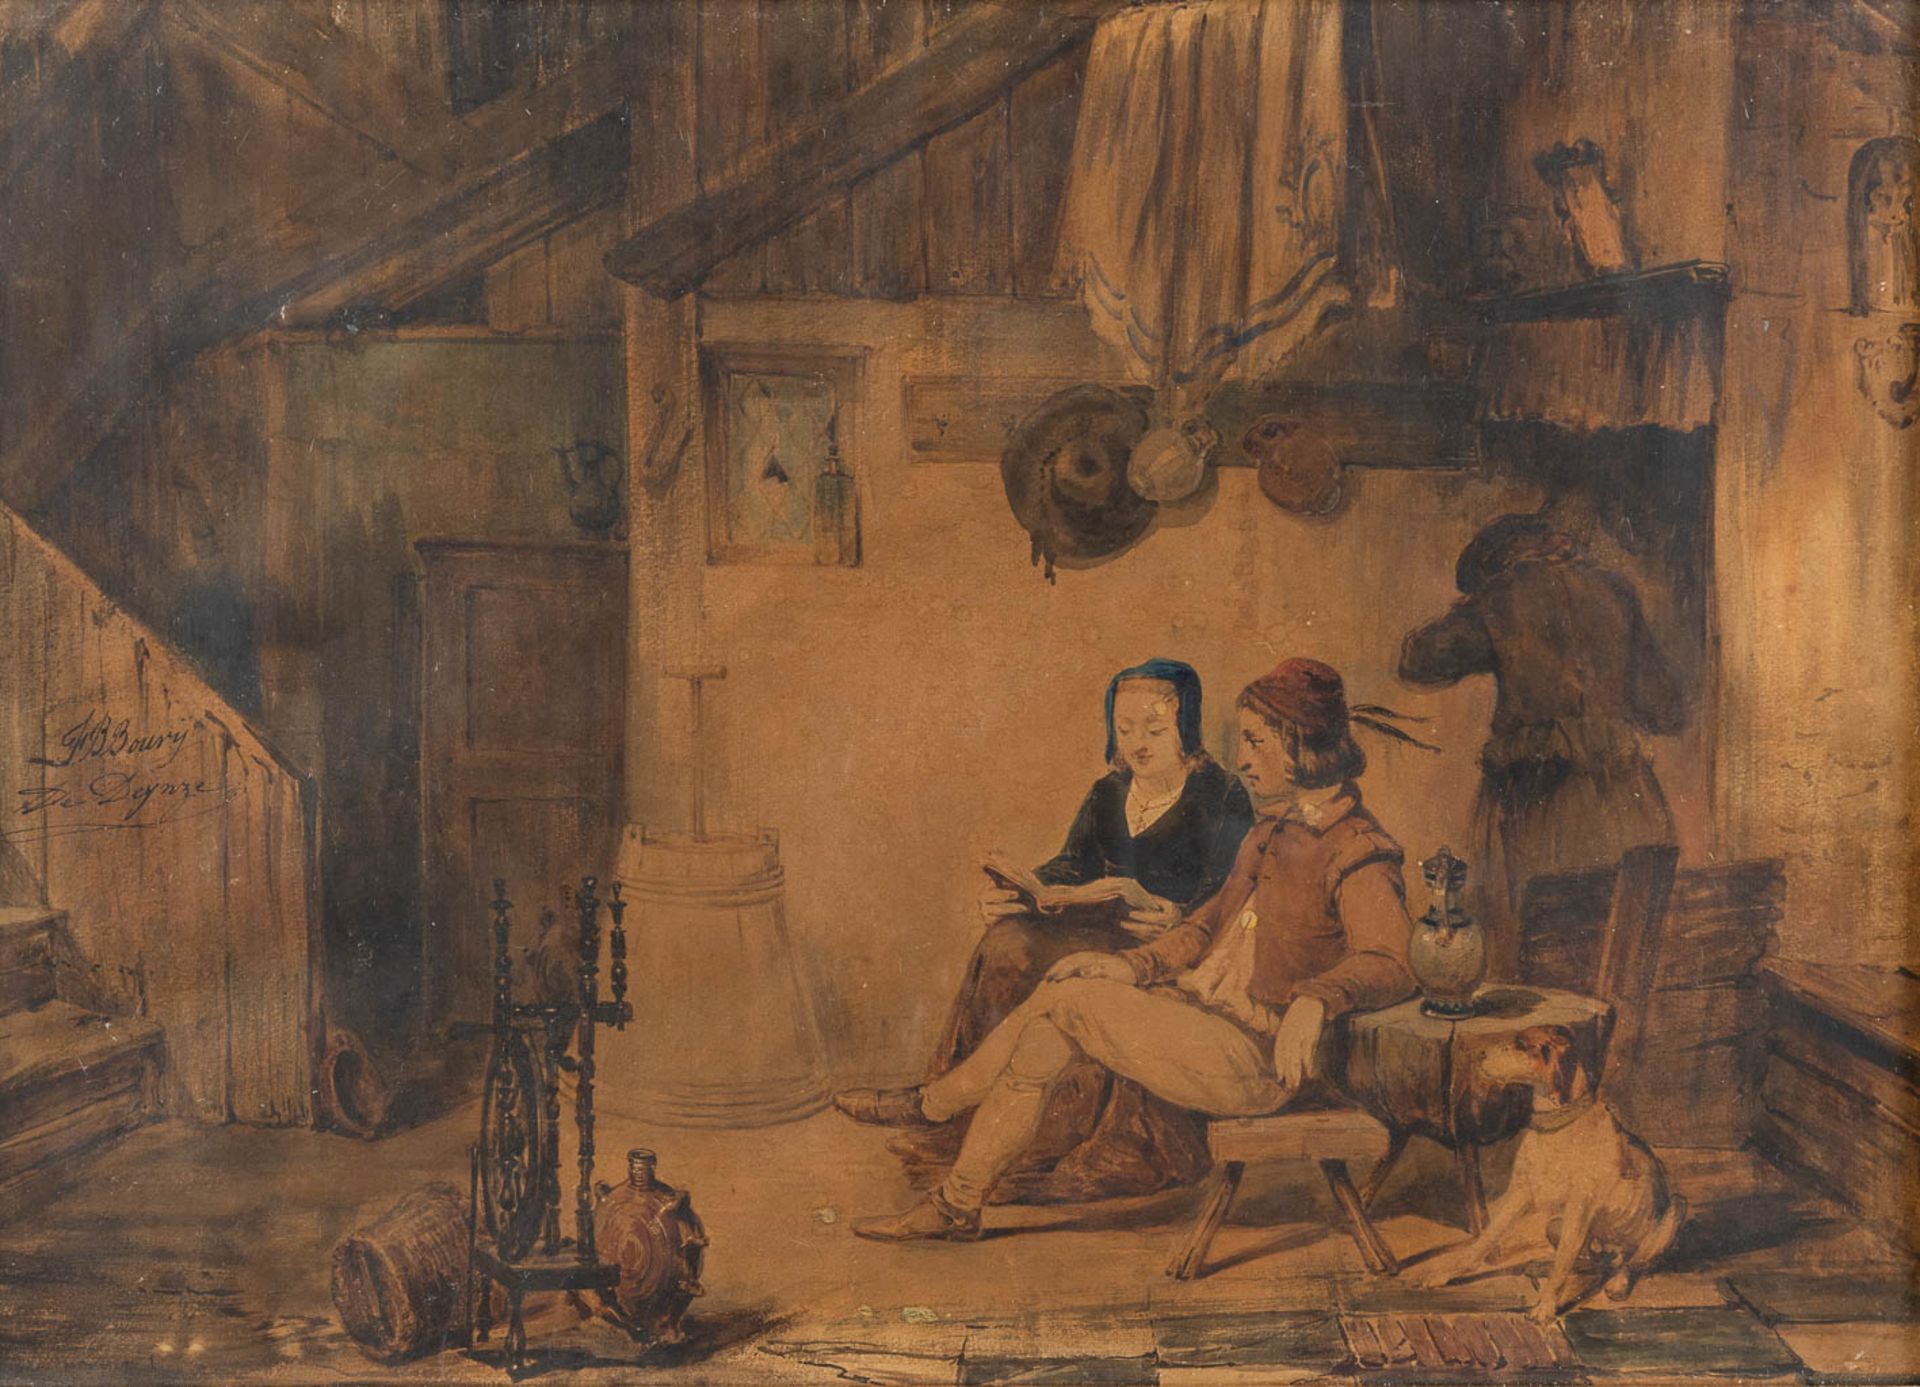 Firmin BOUVY (1822-1891) 'Interior View' watercolour on paper. (W:44 x H:32 cm)